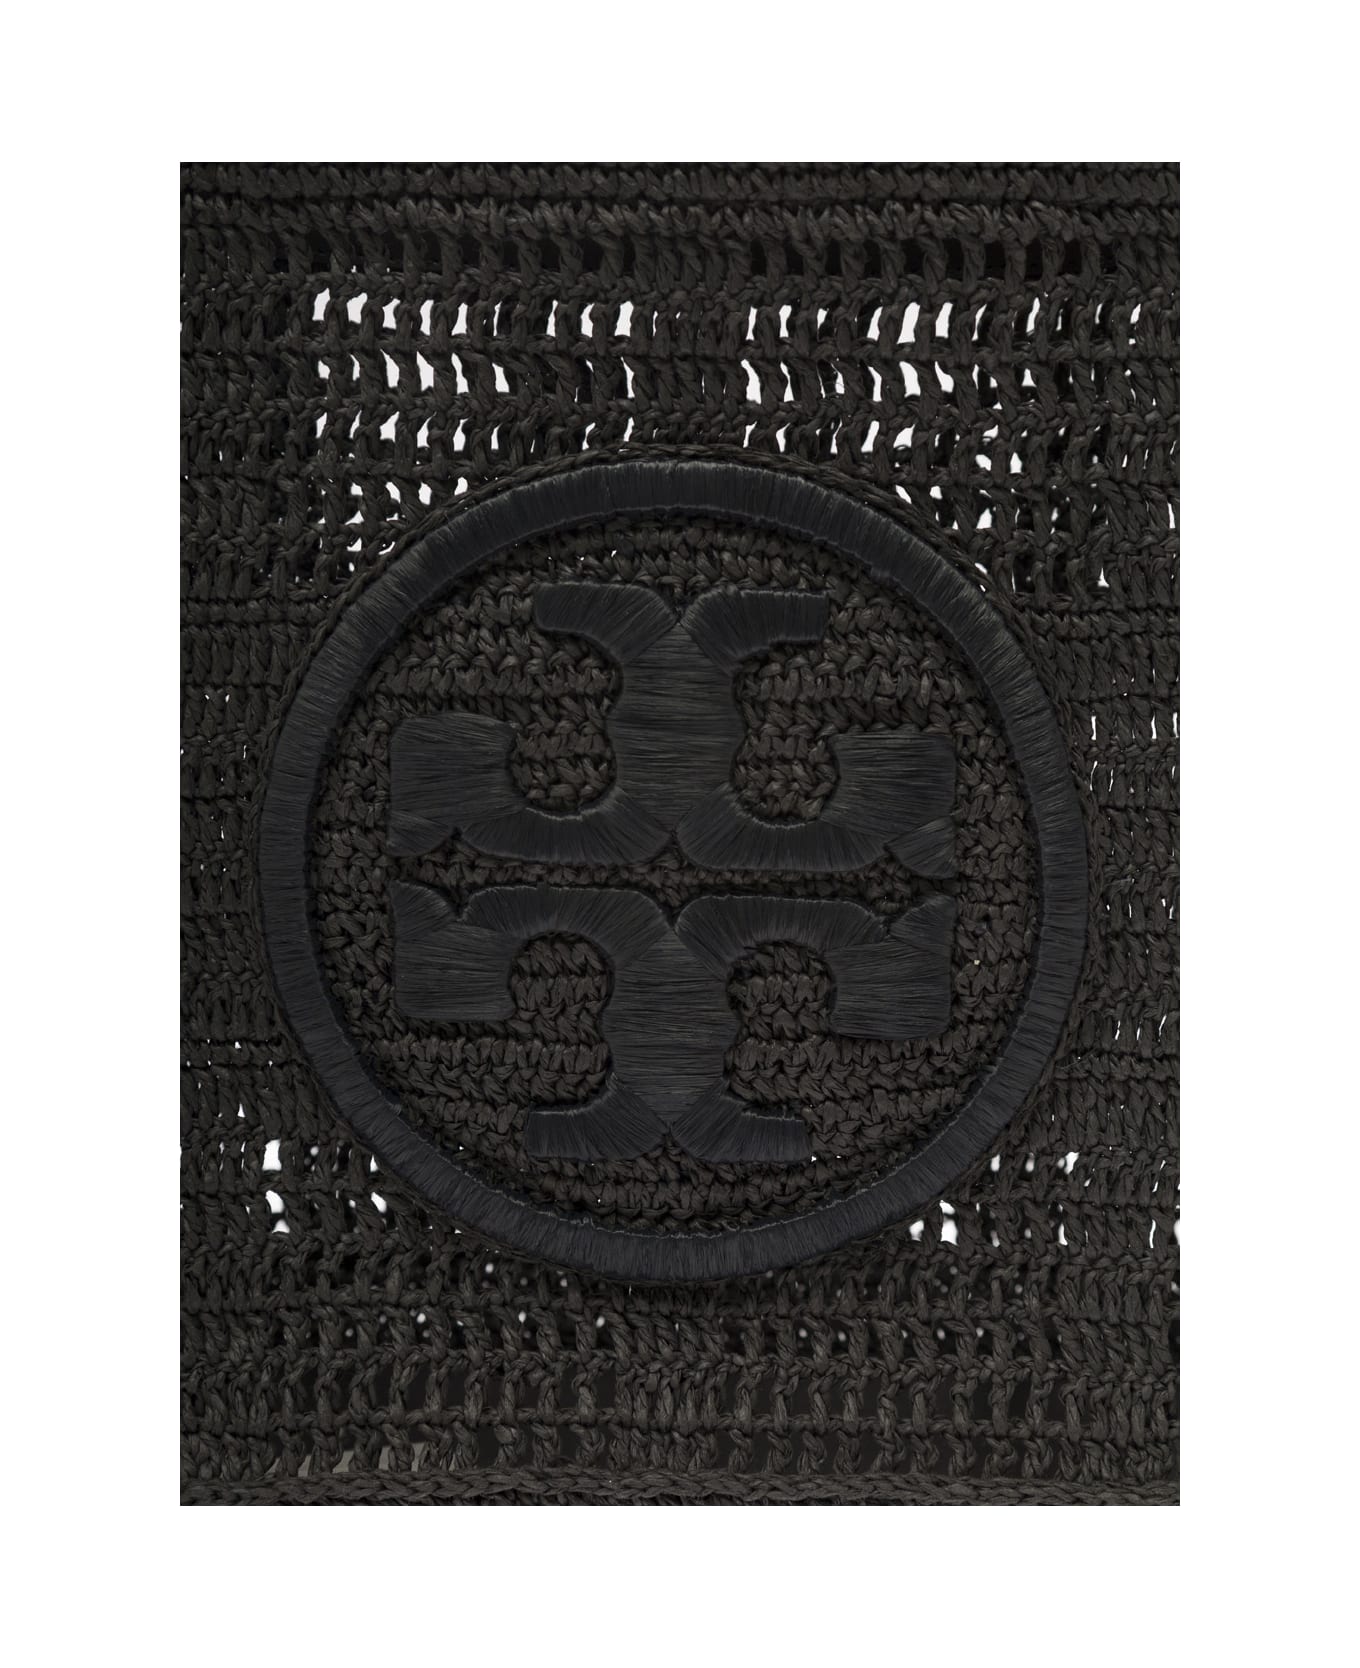 Tory Burch Black Tote Bag With Jacquard Logo In Crochet Woman - Black